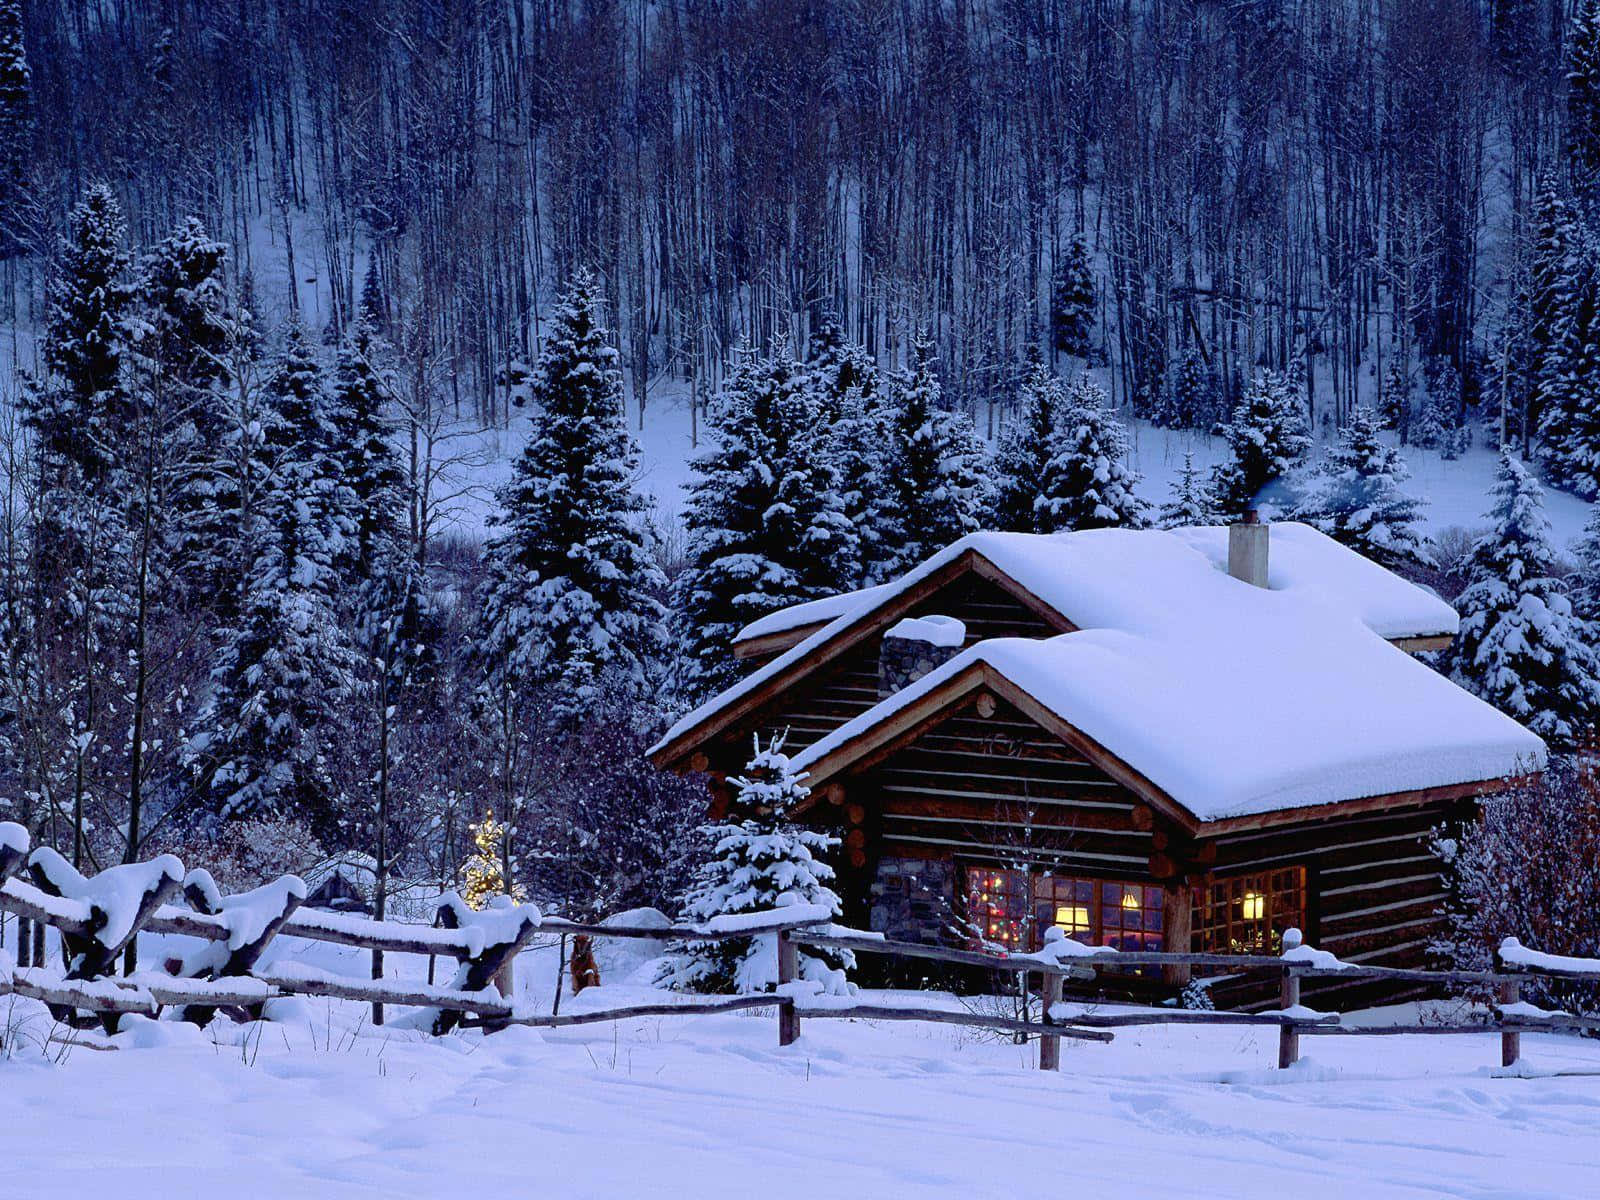 Enchanting Snowy Winter Cabin Wallpaper